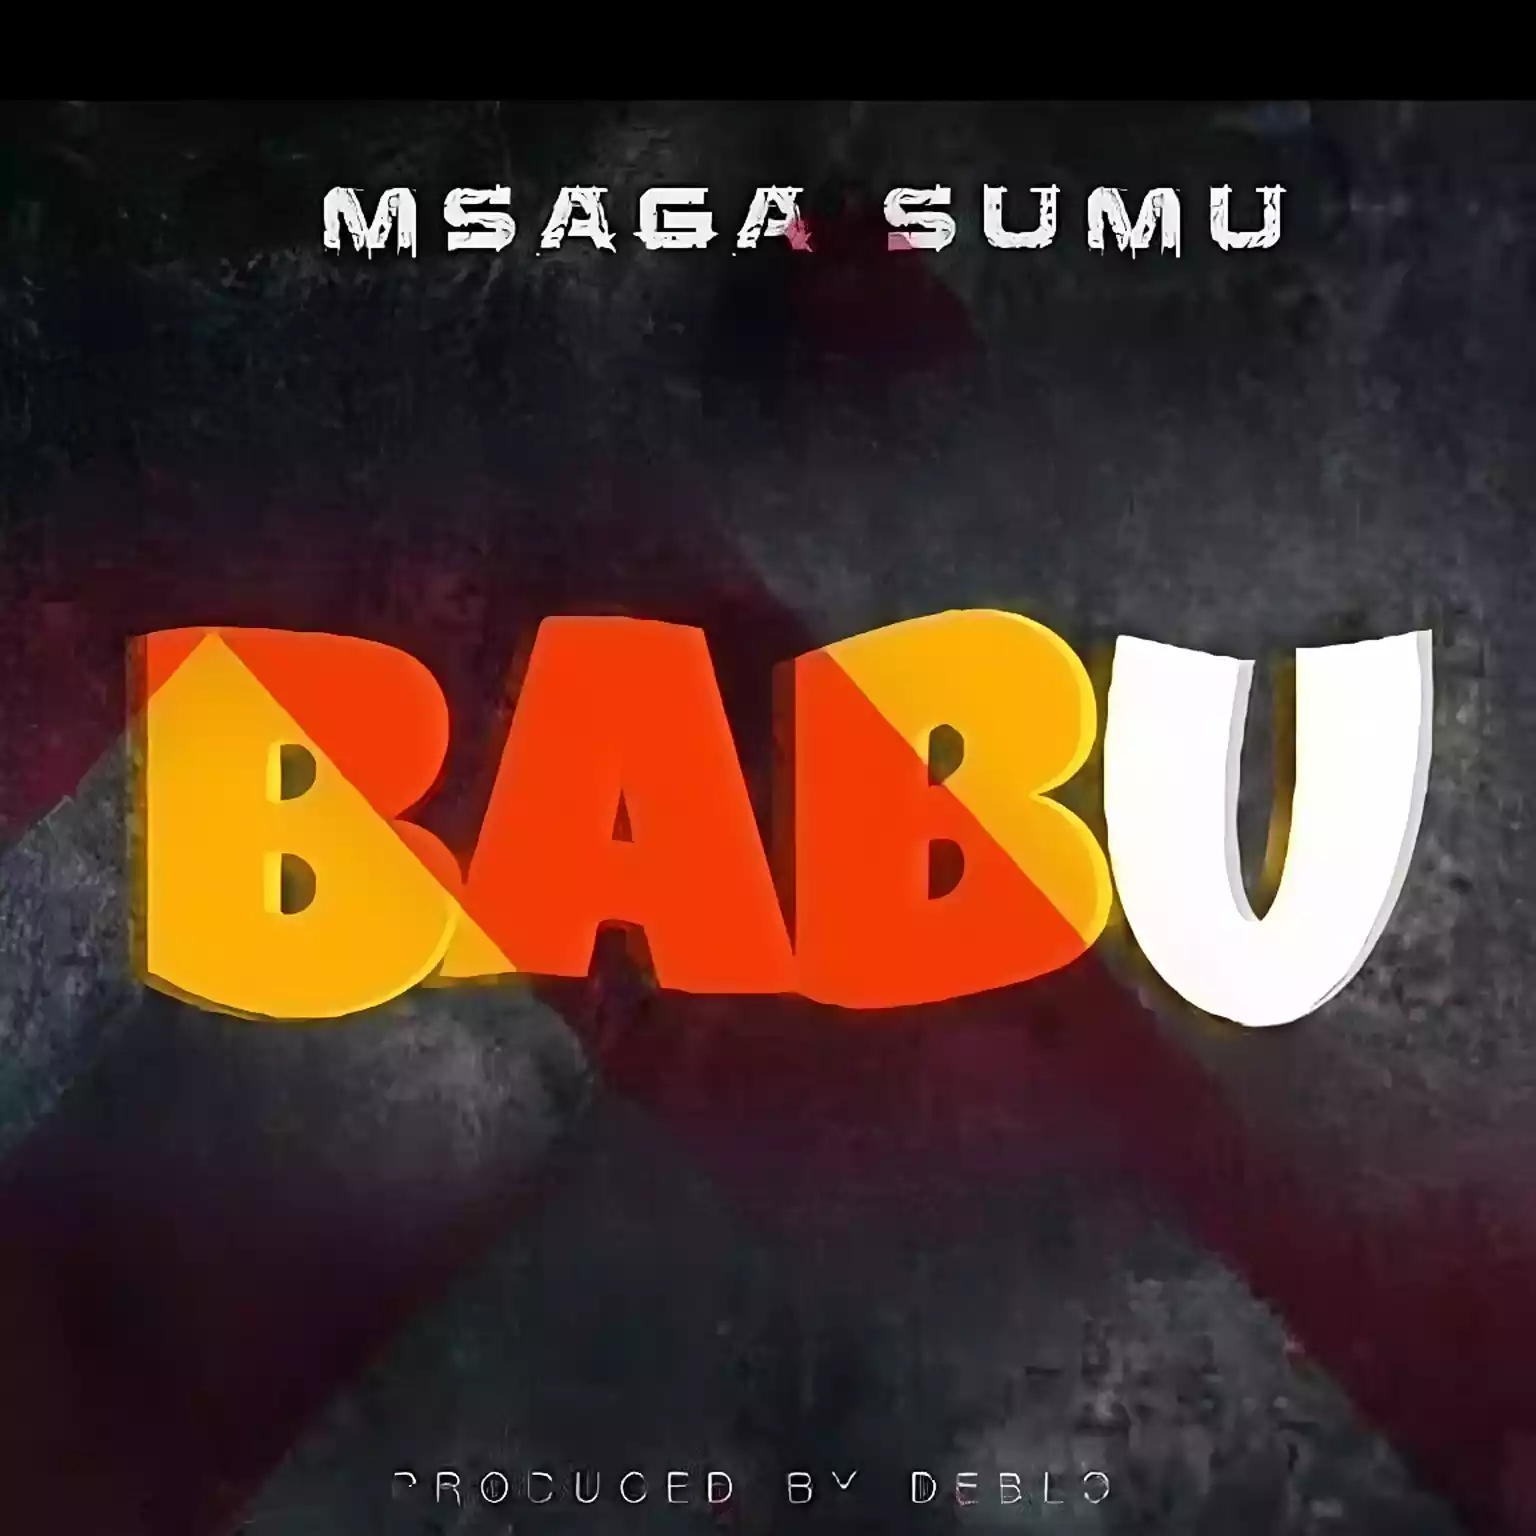 Msaga Sumu - Babu Mp3 Download